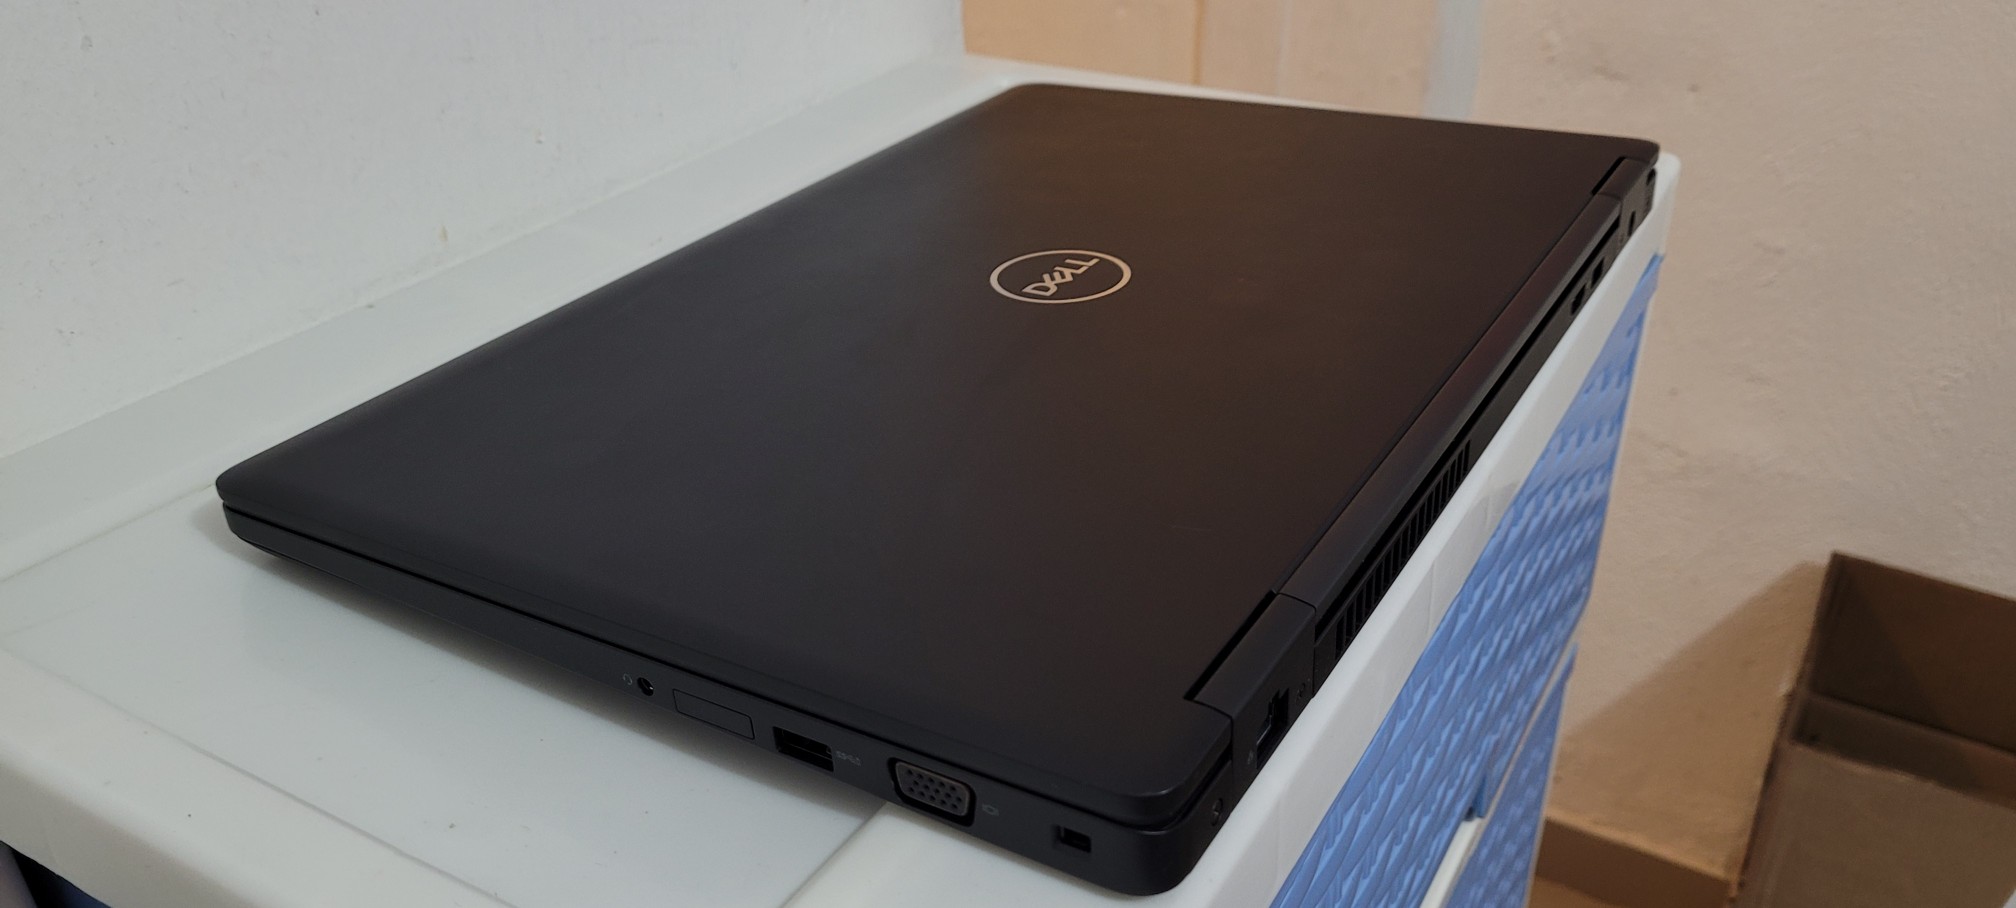 computadoras y laptops - Dell 5580 17 Pulg Core i5 7ma Gen Ram 8gb ddr4 Disco 128gb SSD Nvidea mx930 6gb 2